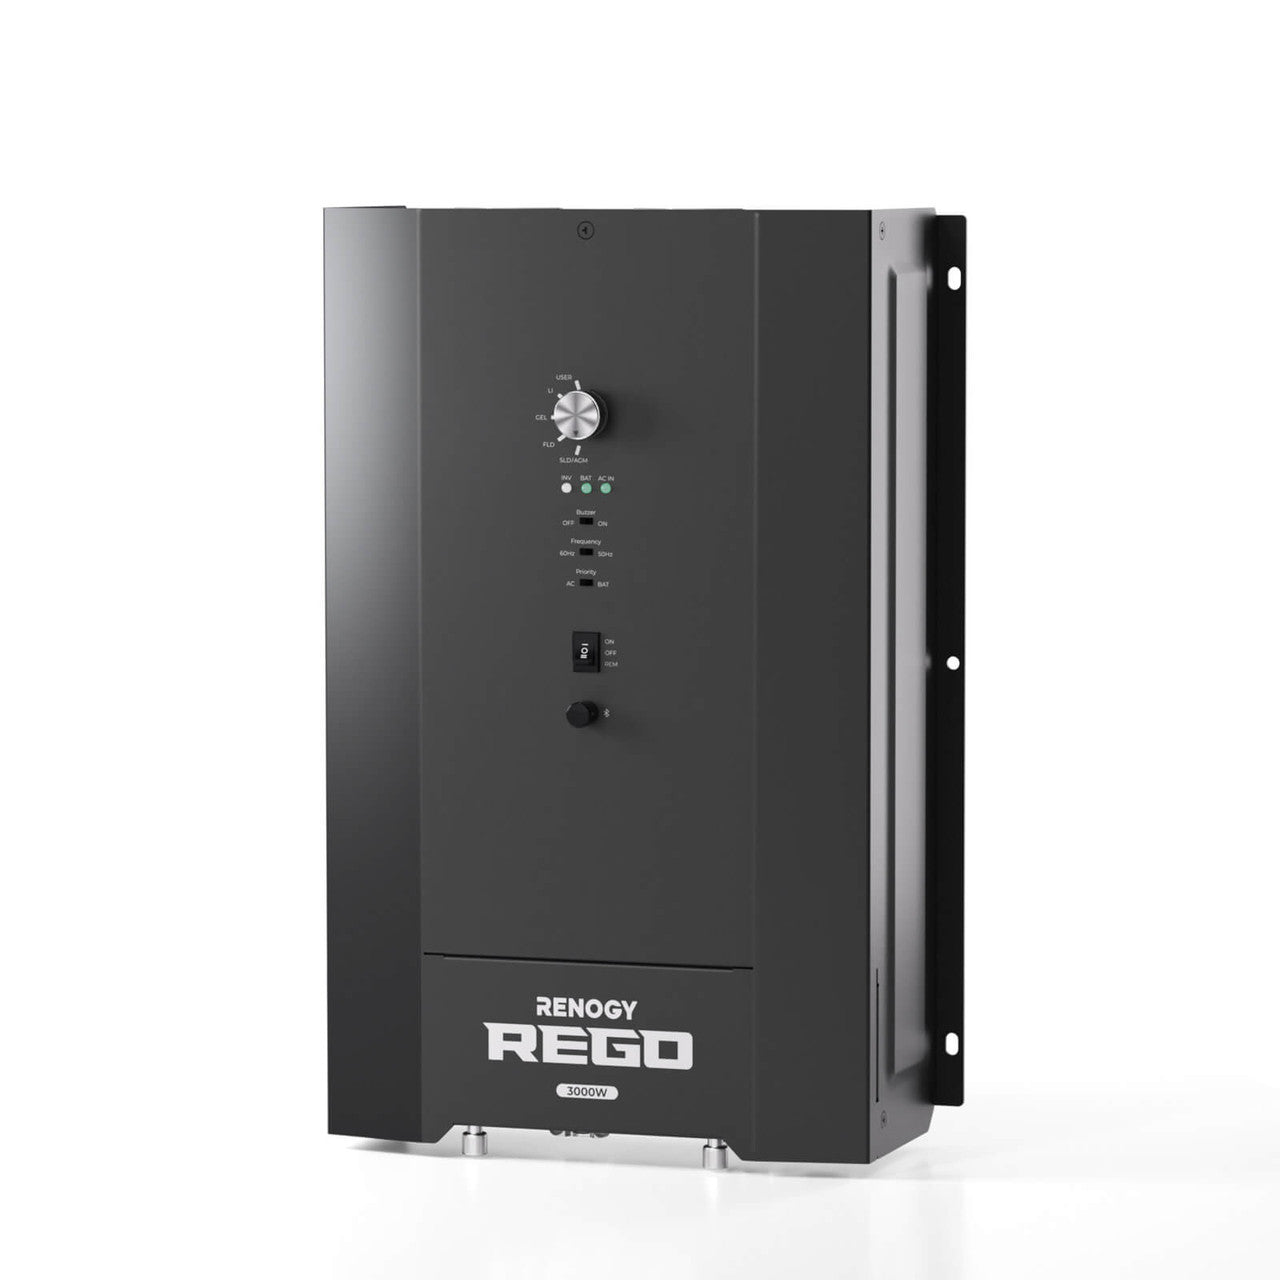 Renogy REGO 3000W 12V Pure Sine Wave HF Inverter Charger Split-phase Design - Solar Generators and Power Stations Plus